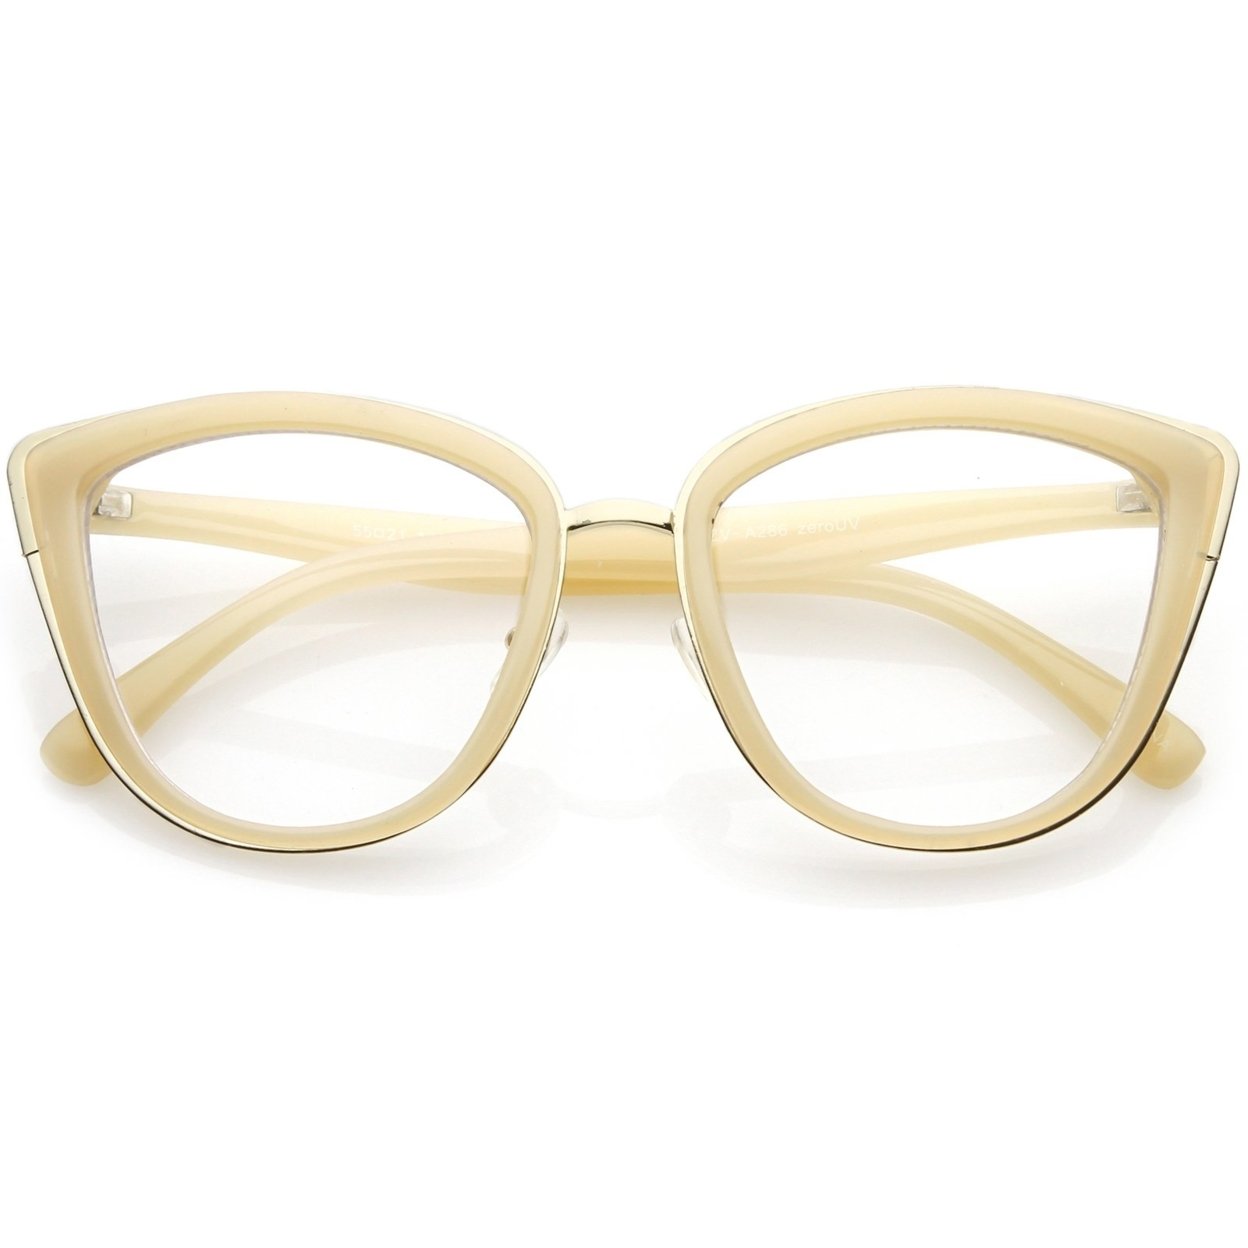 Oversize Rimmed Metal Cat Eye Glasses Clear Lens 55mm - Black Gold / Clear